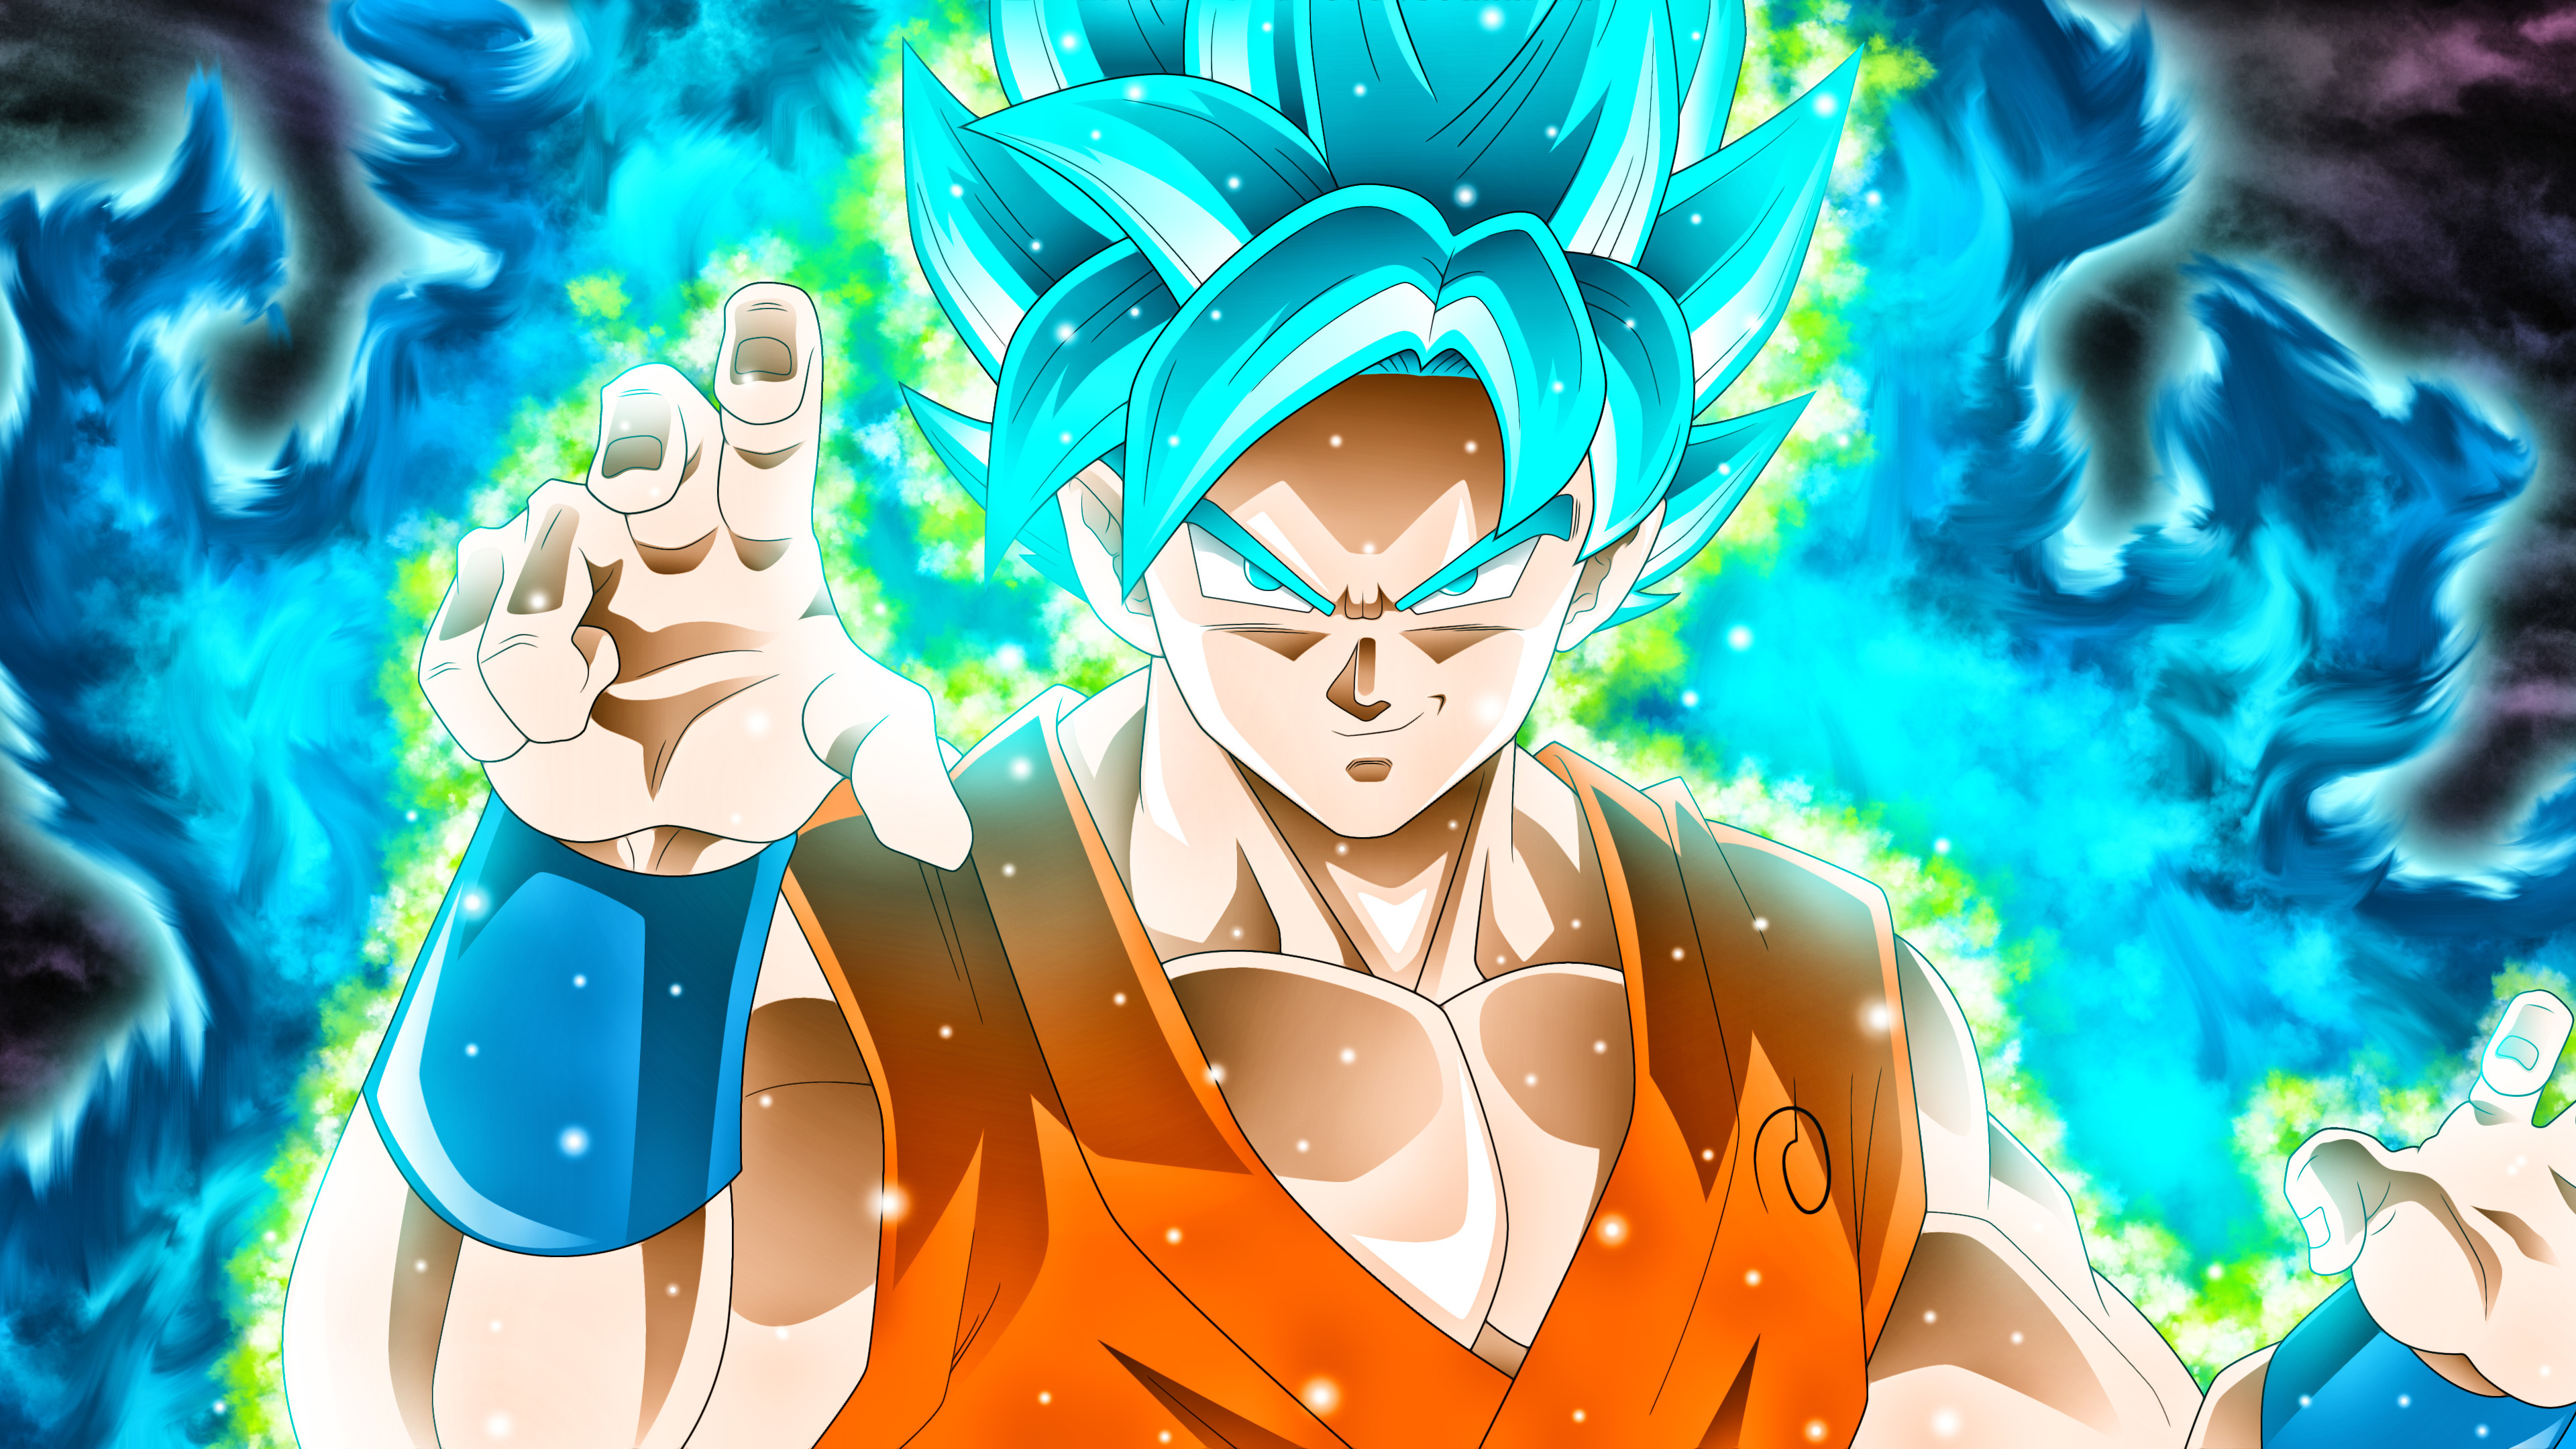 Goku in dragon ball 4K wallpaper download